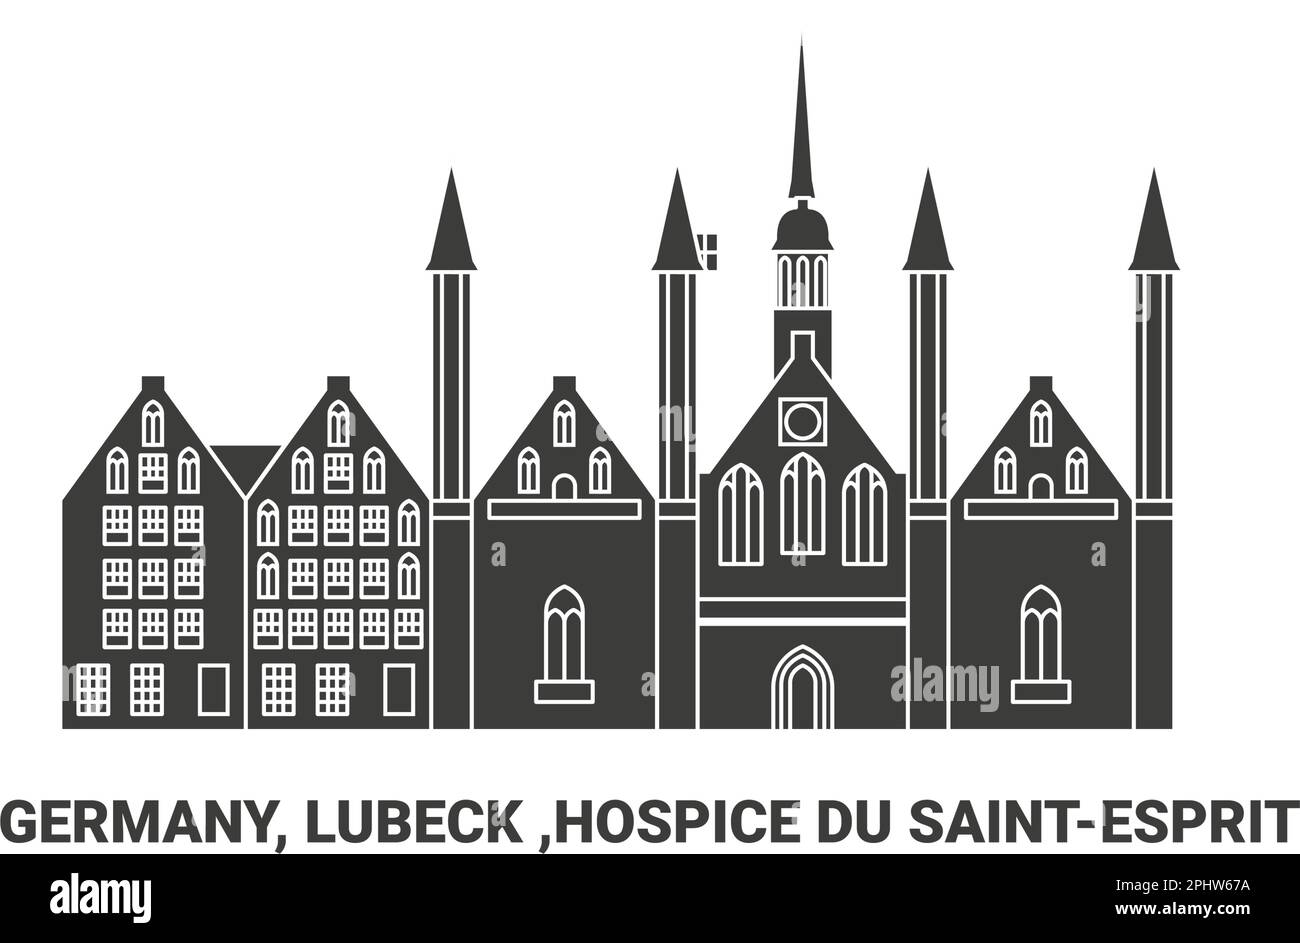 Deutschland, Lübeck, Hospice Du Saintesprit, Reise-Landmarke Vektordarstellung Stock Vektor